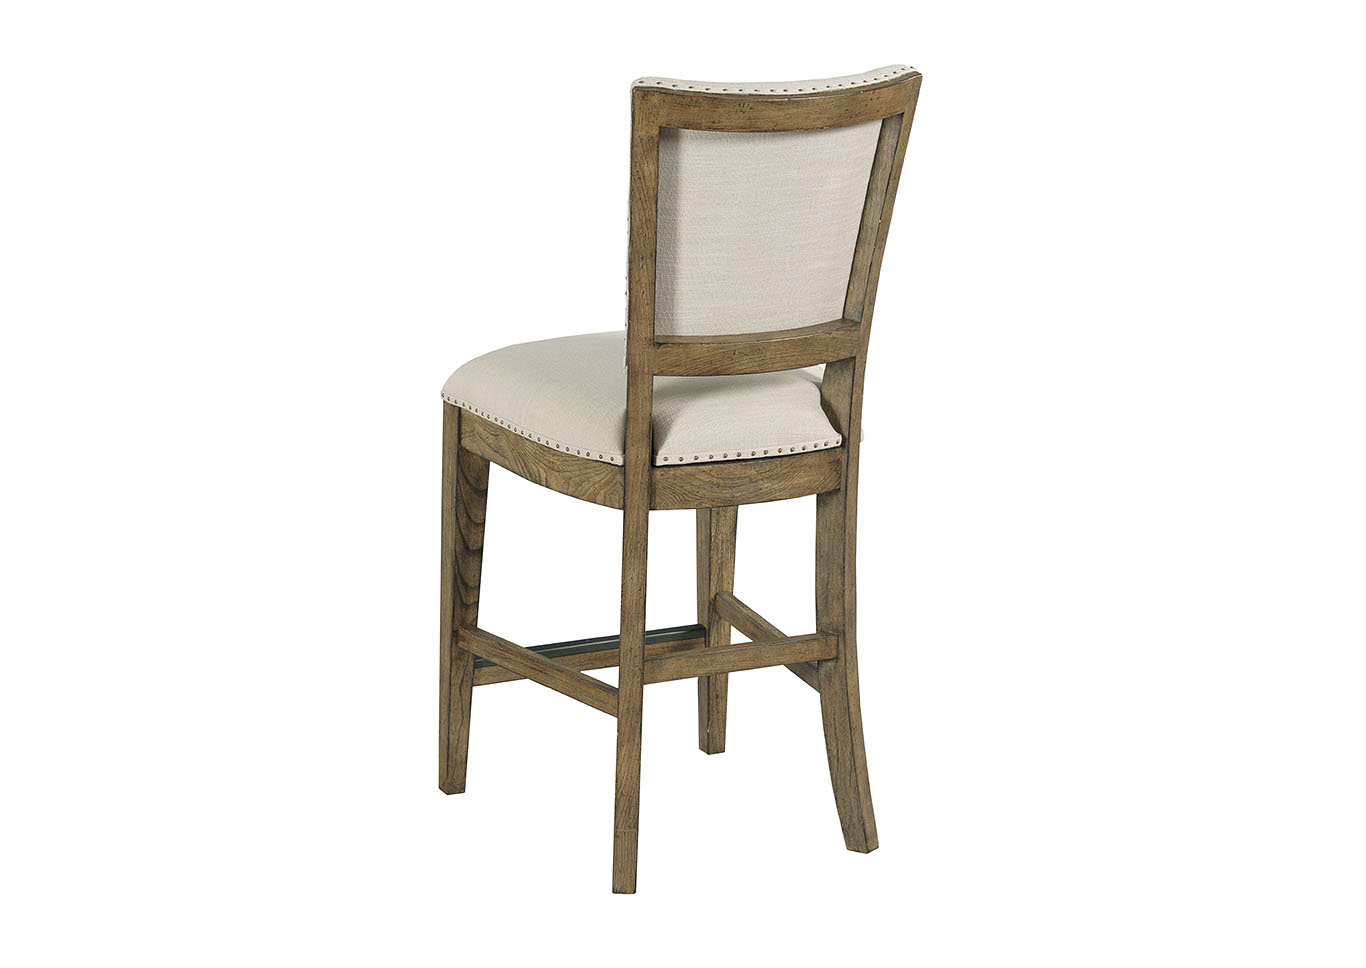 Kimler Stone Counter Chair (Set of 2),Kincaid